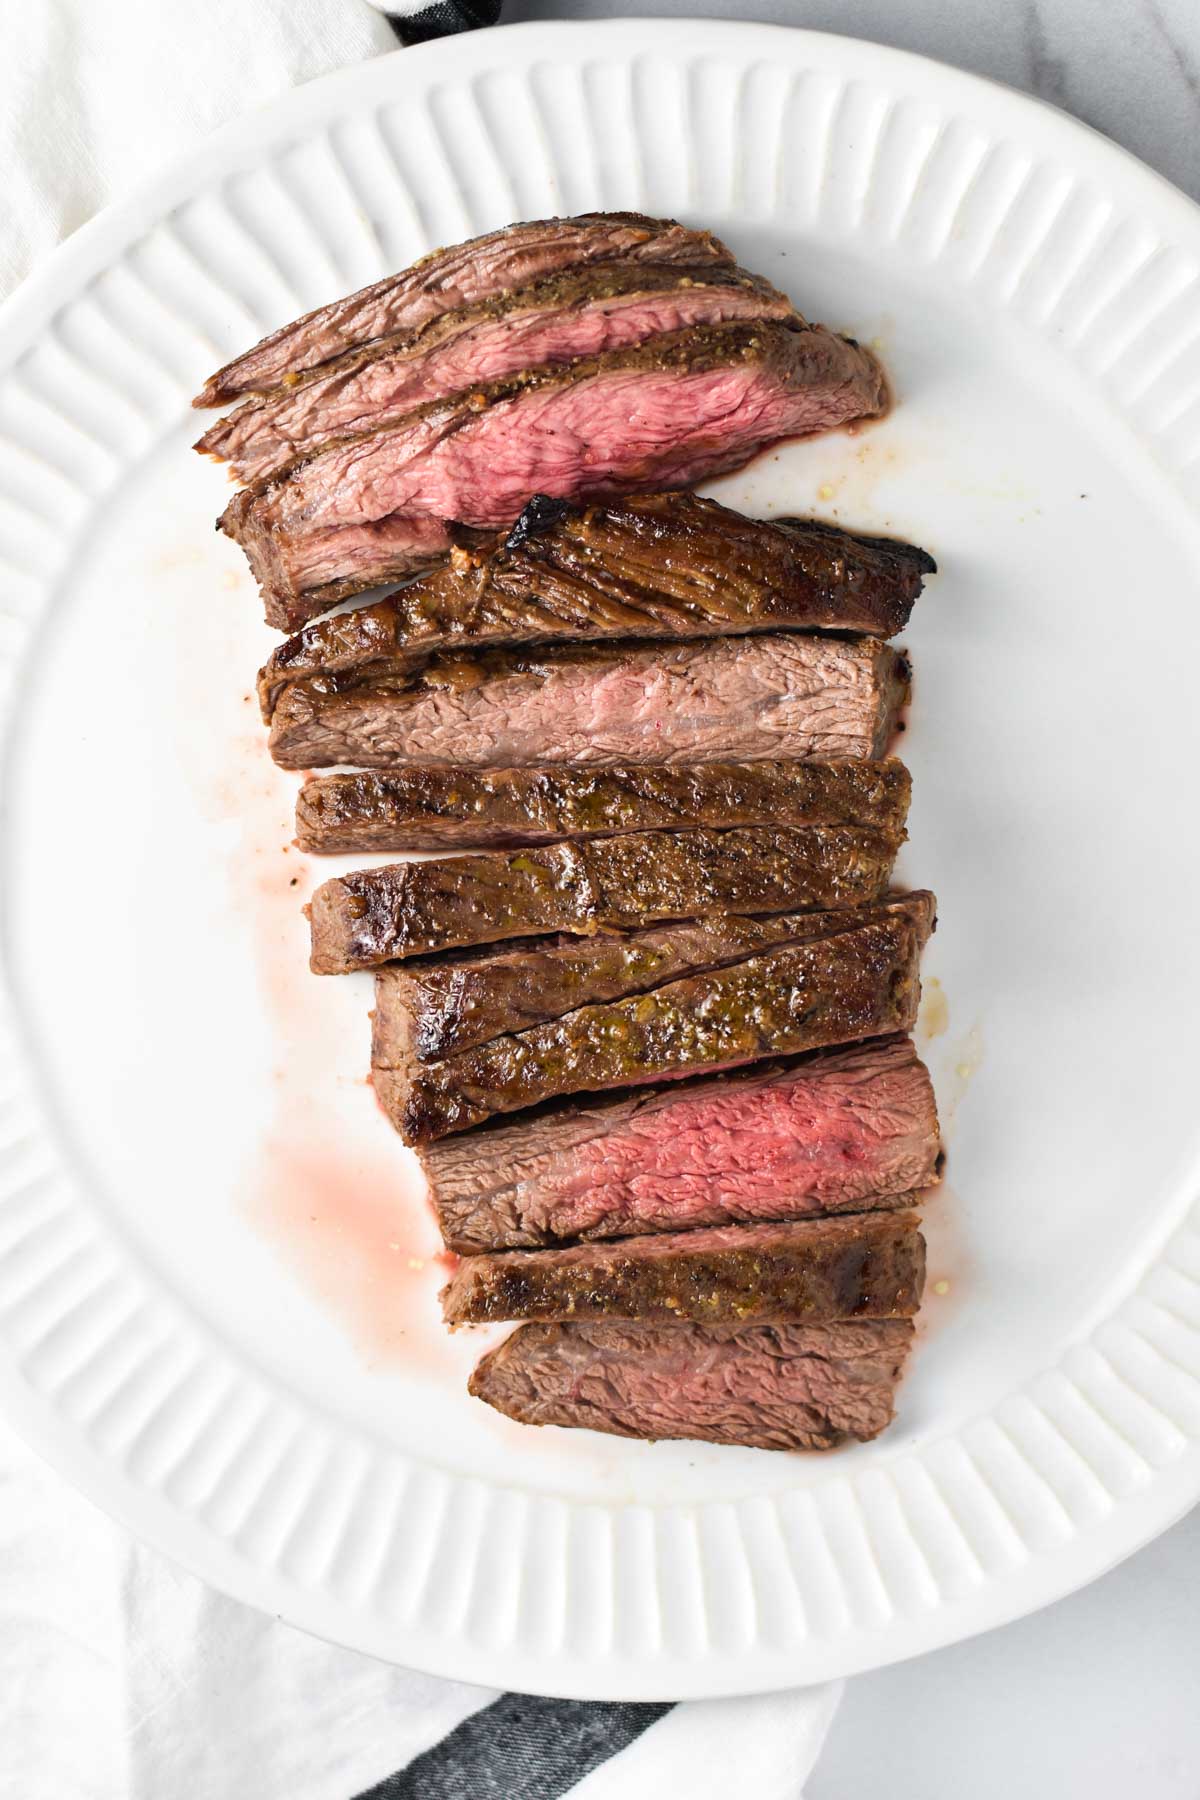 A plate of sliced flank steak showing medium and medium rare cuts.